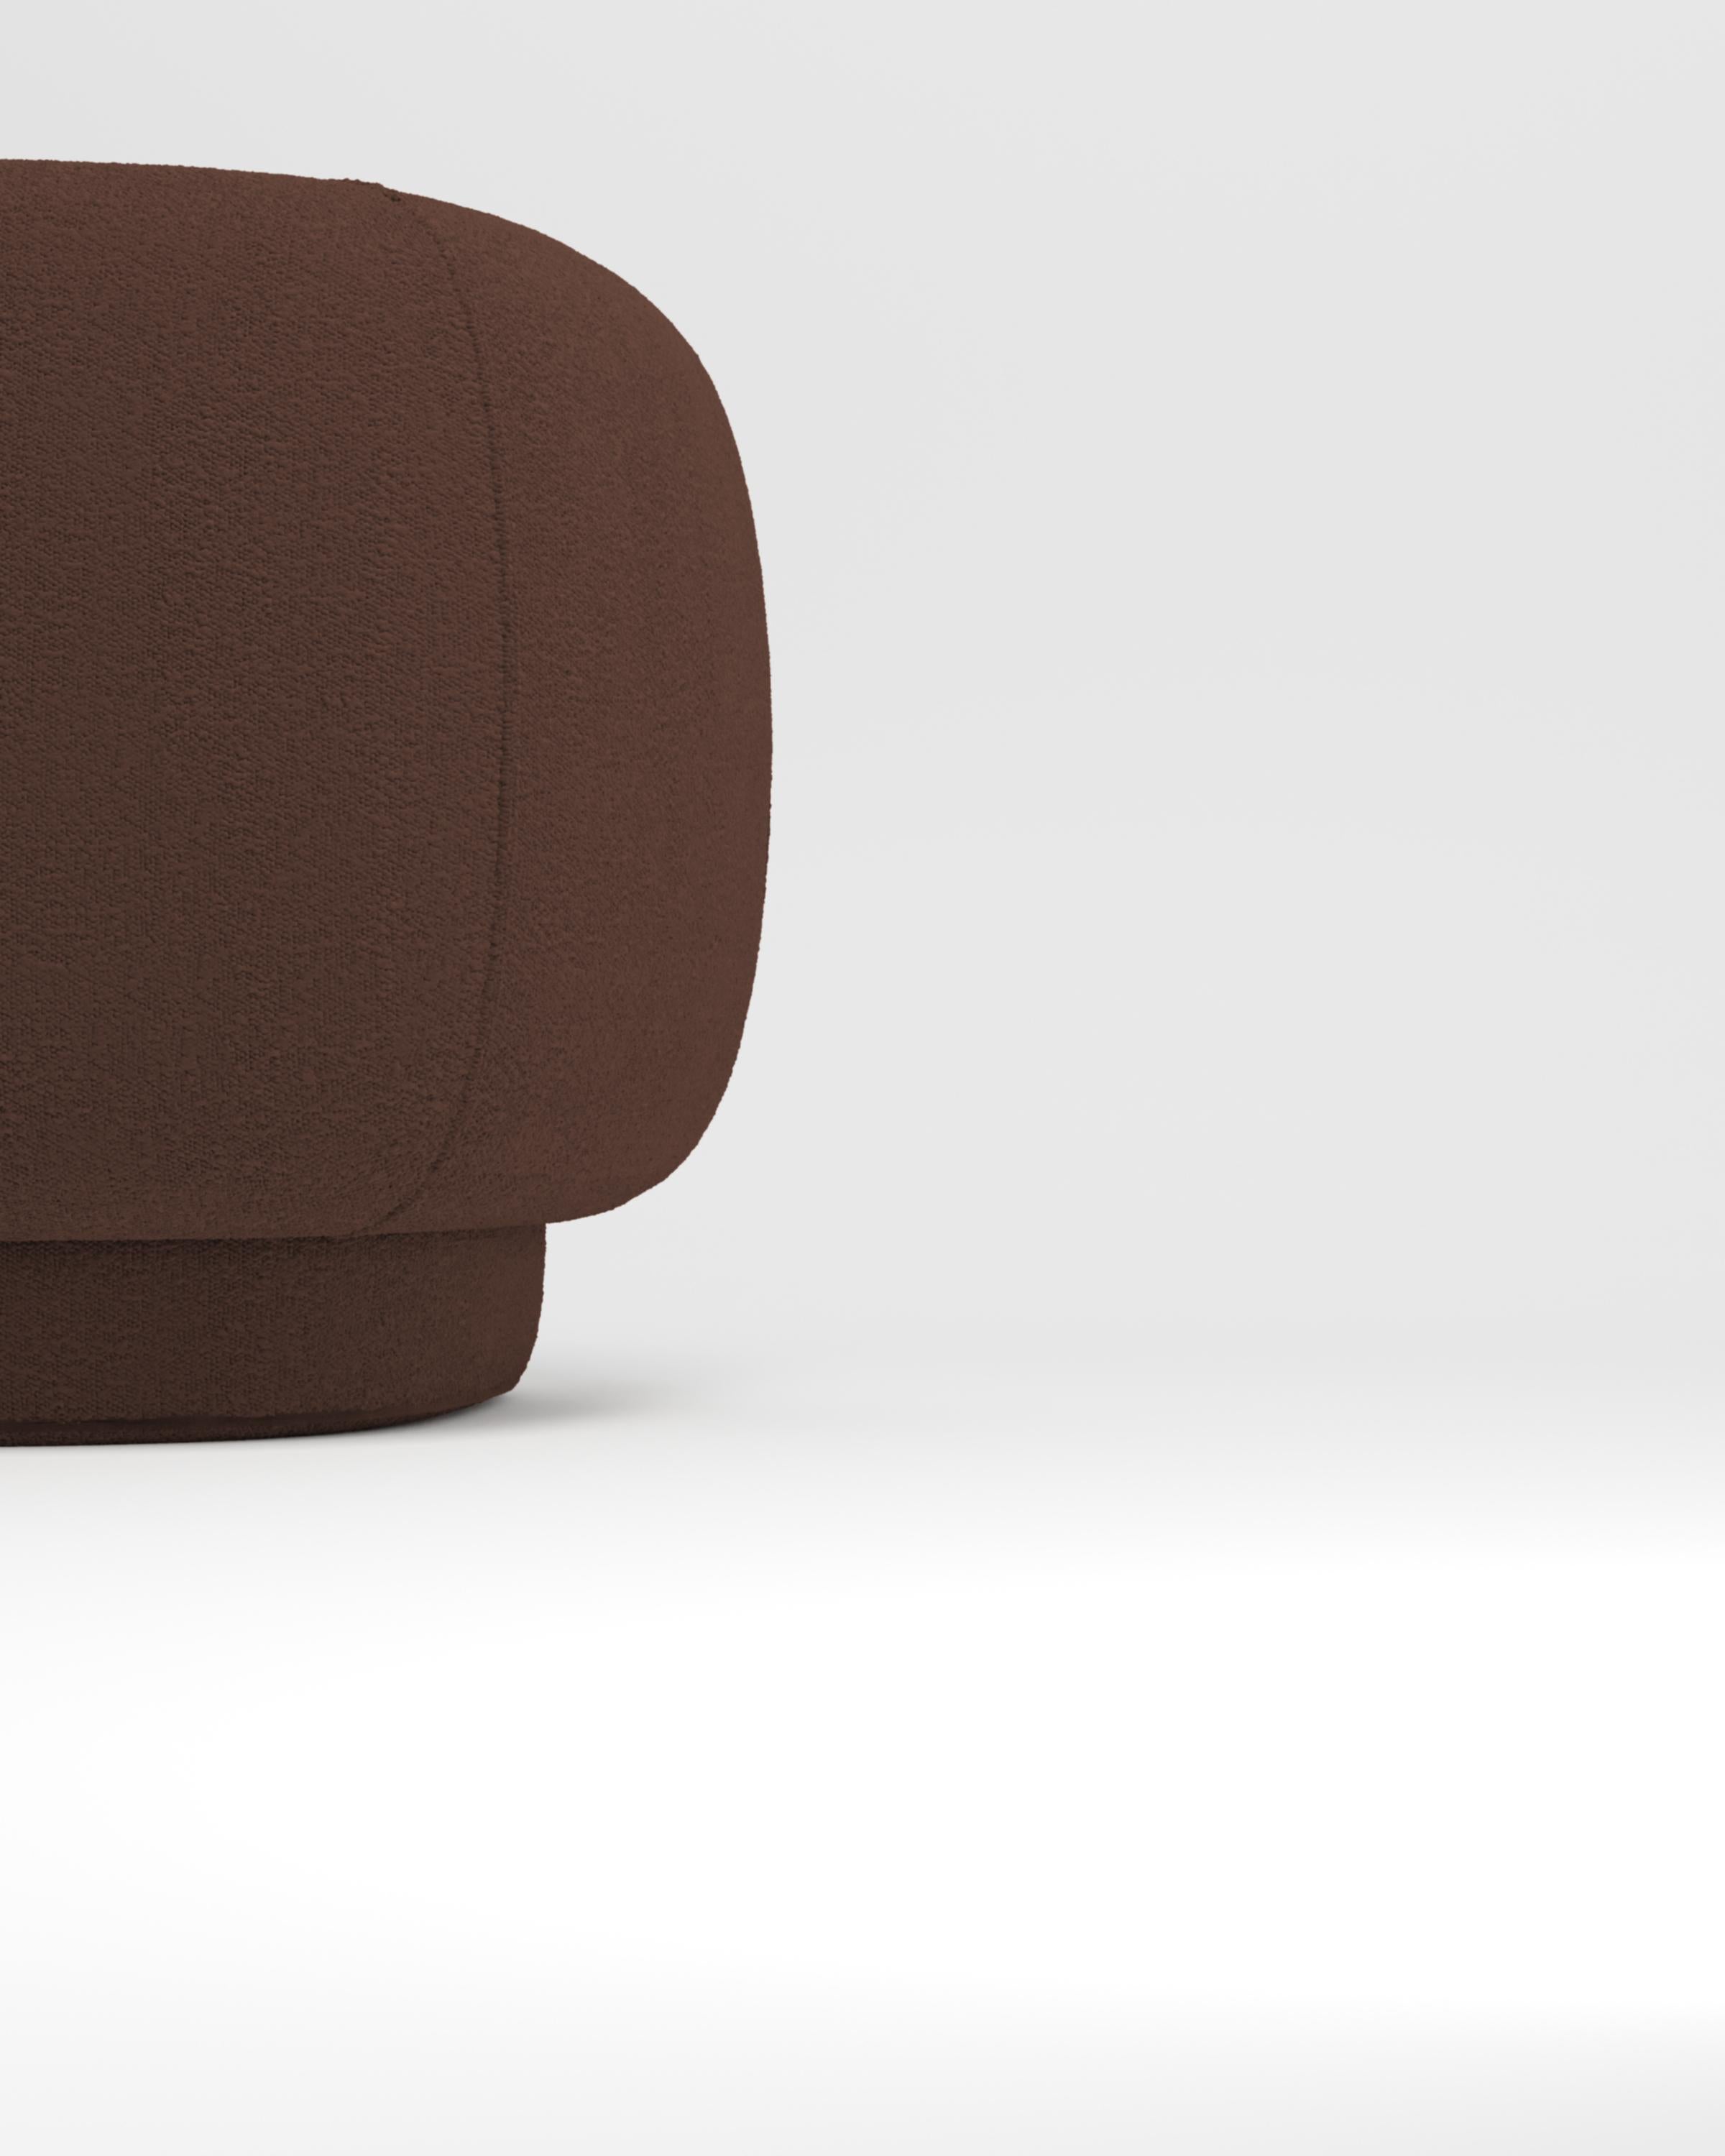 Portuguese Collector Hug Sofa Designed by Ferrianisbolgi Fabric Boucle Dark Brown For Sale